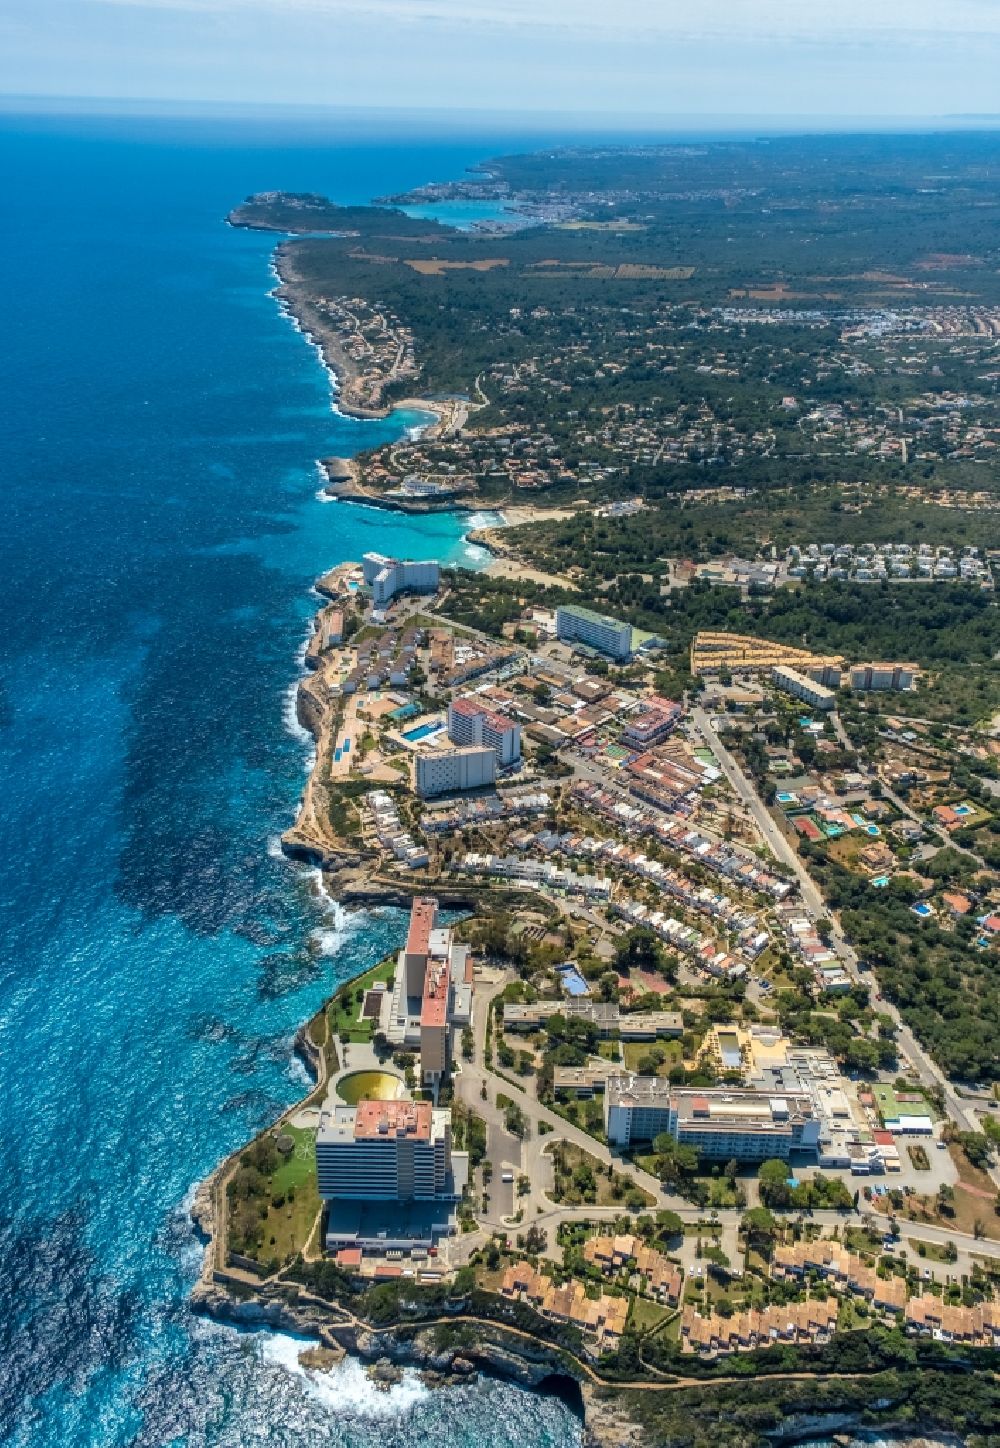 Luftaufnahme Cales de Mallorca - Meeres-Küste mit Blick auf das Alua Calas de Mallorca Resort in Cales de Mallorca auf der balearischen Mittelmeerinsel Mallorca, Spanien